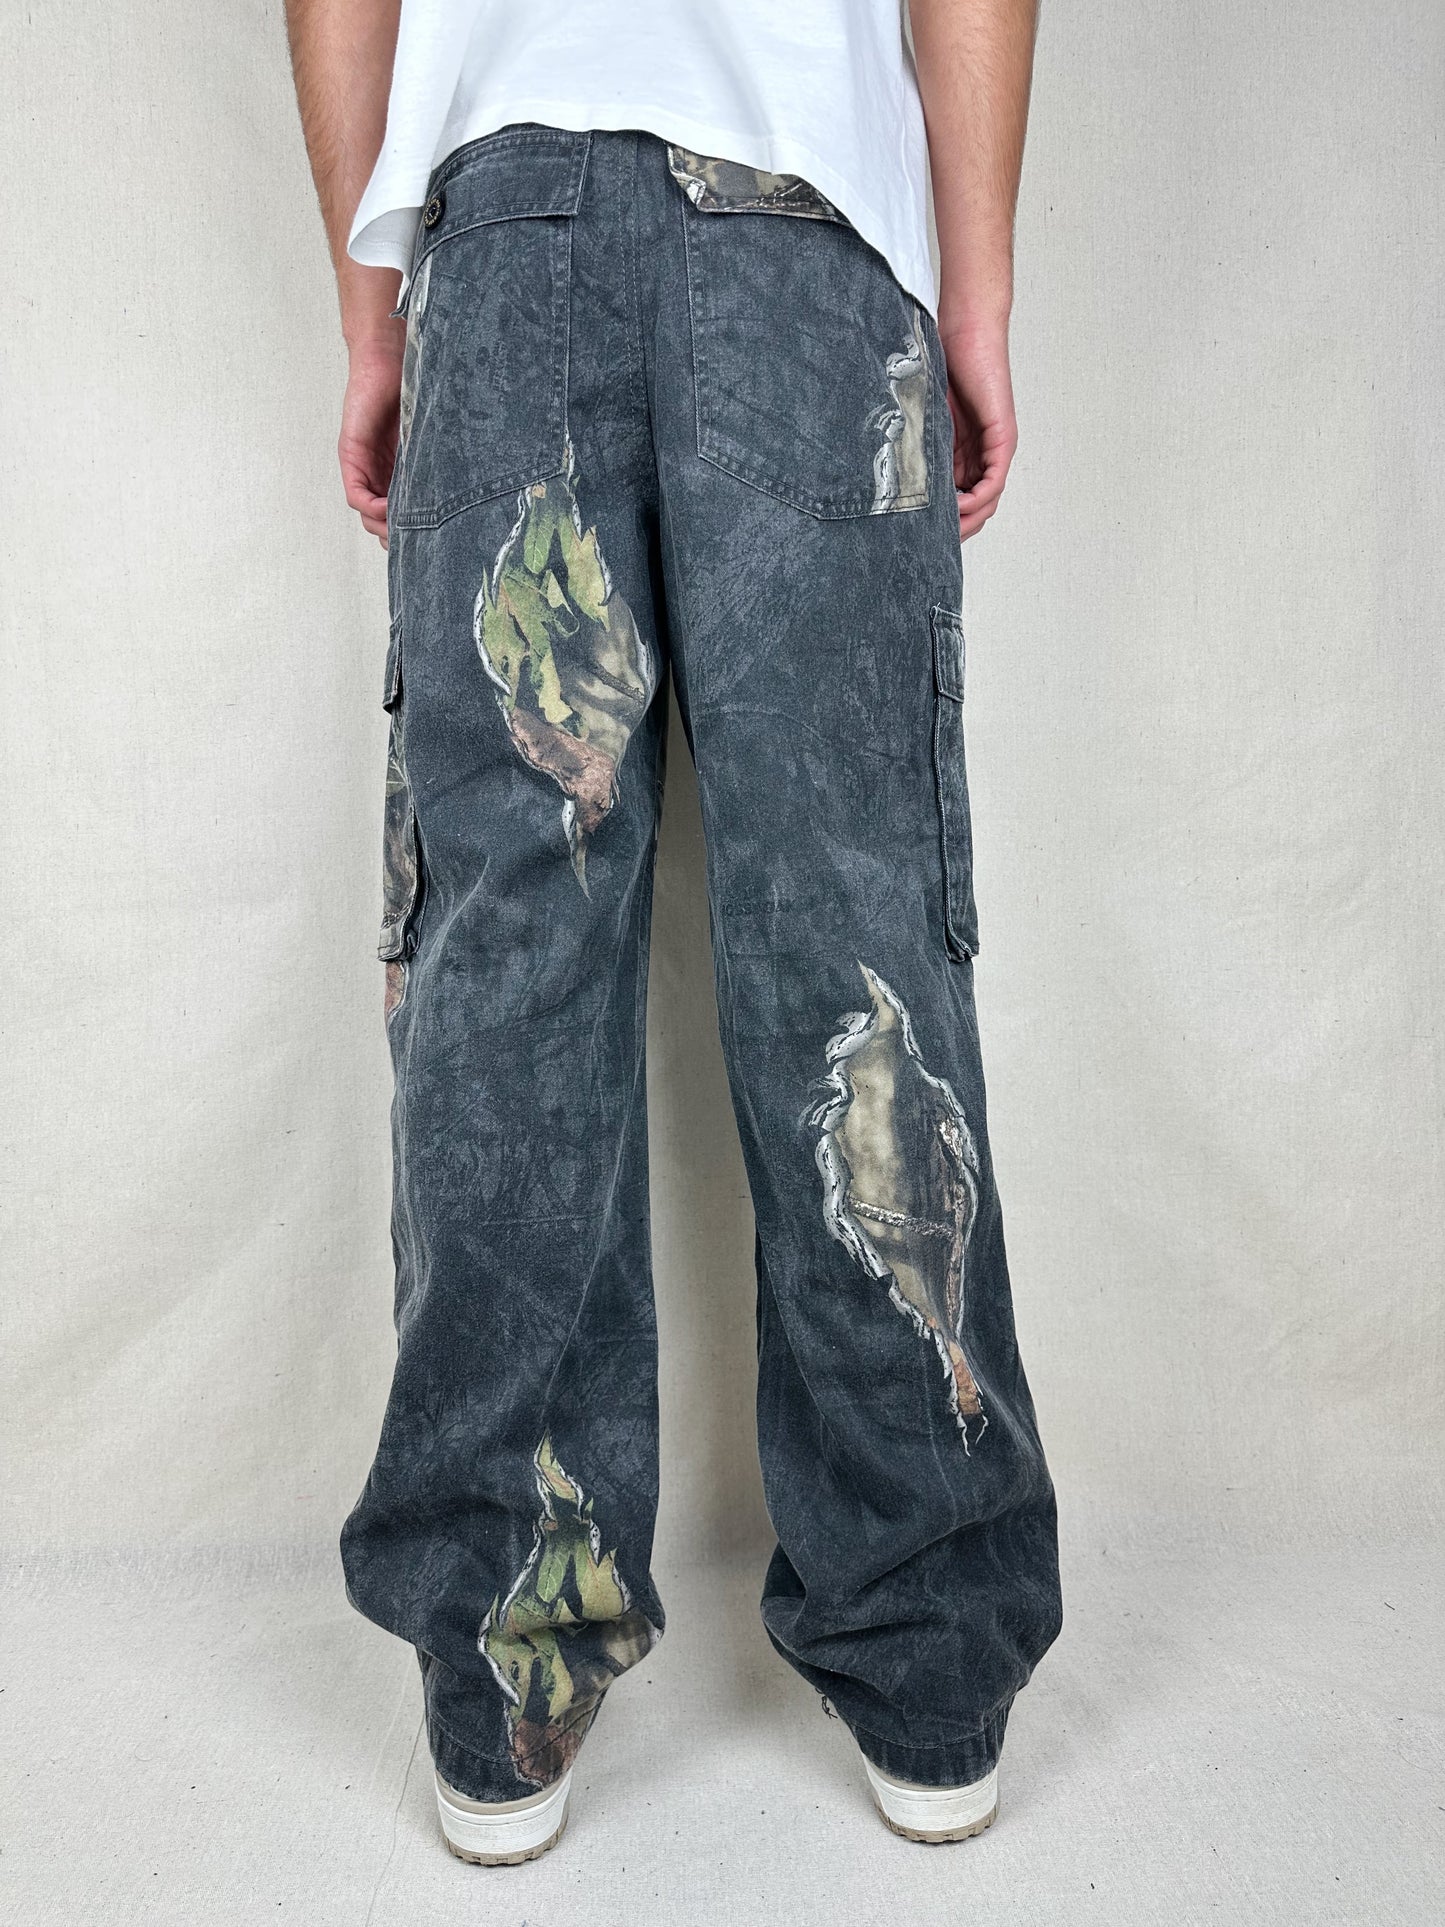 90's Mossy Oak Realtree Camo Vintage Cargo Pants Size 32x32